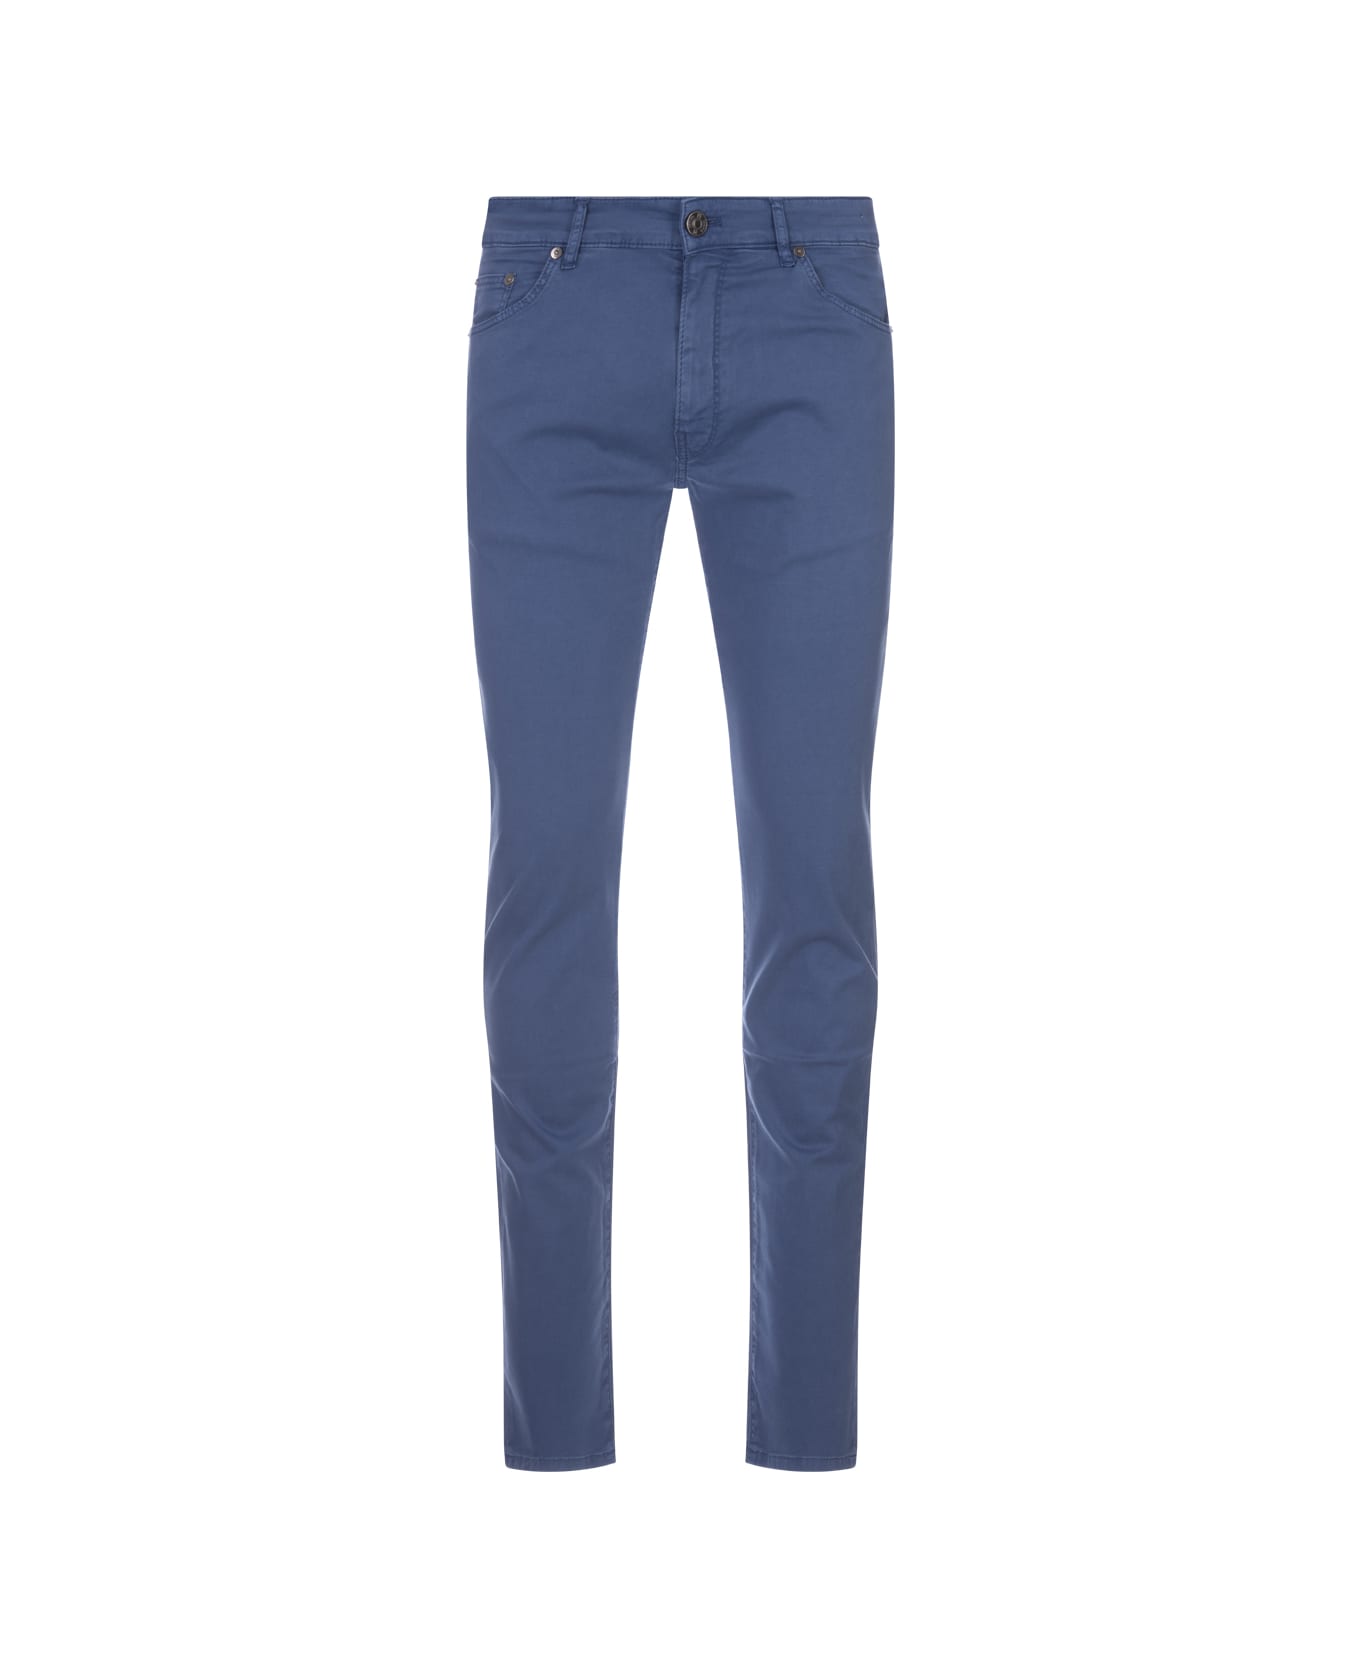 PT Torino Swing Jeans In Blue Stretch Denim - Blue デニム